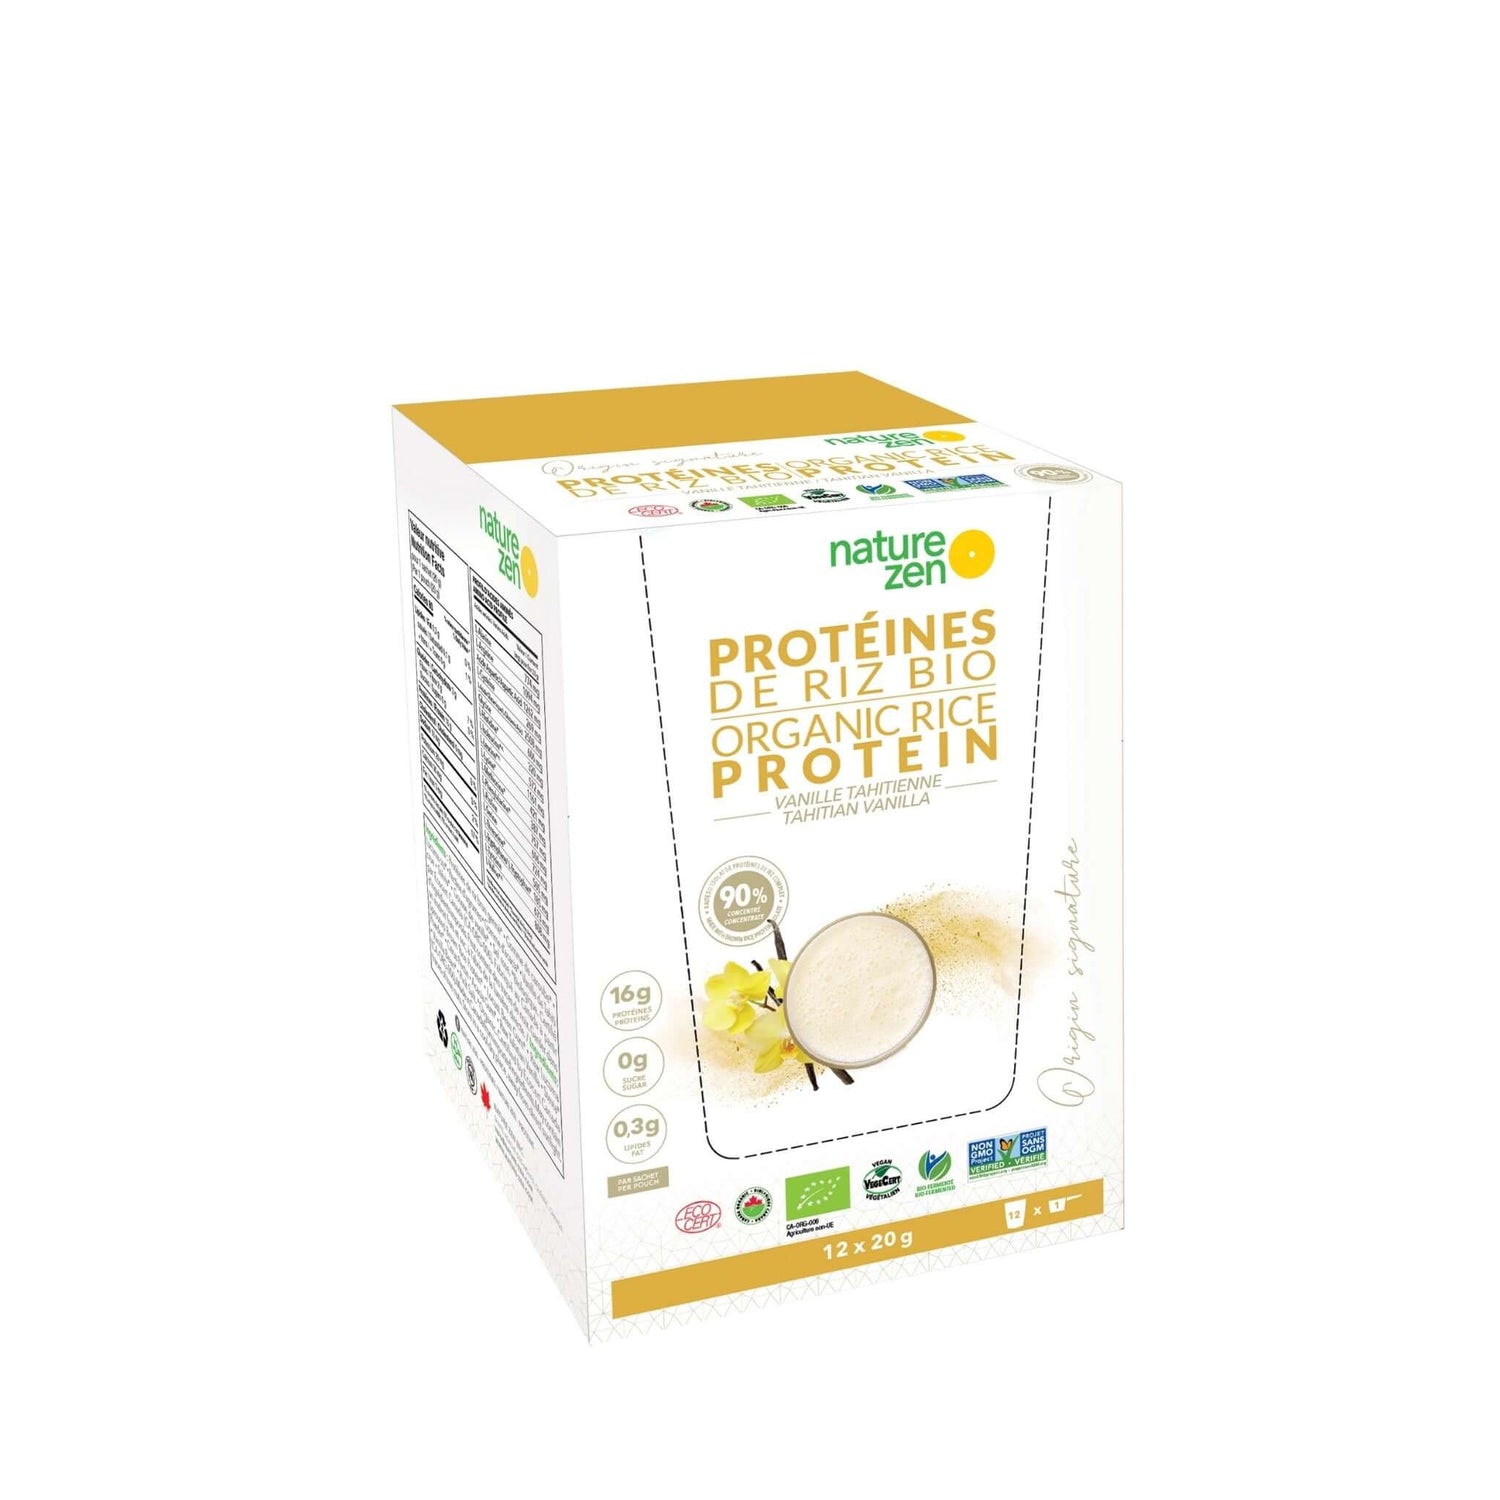 Nature Zen Origin - Organic Rice Protein Powder - Tahitian Vanilla (box)